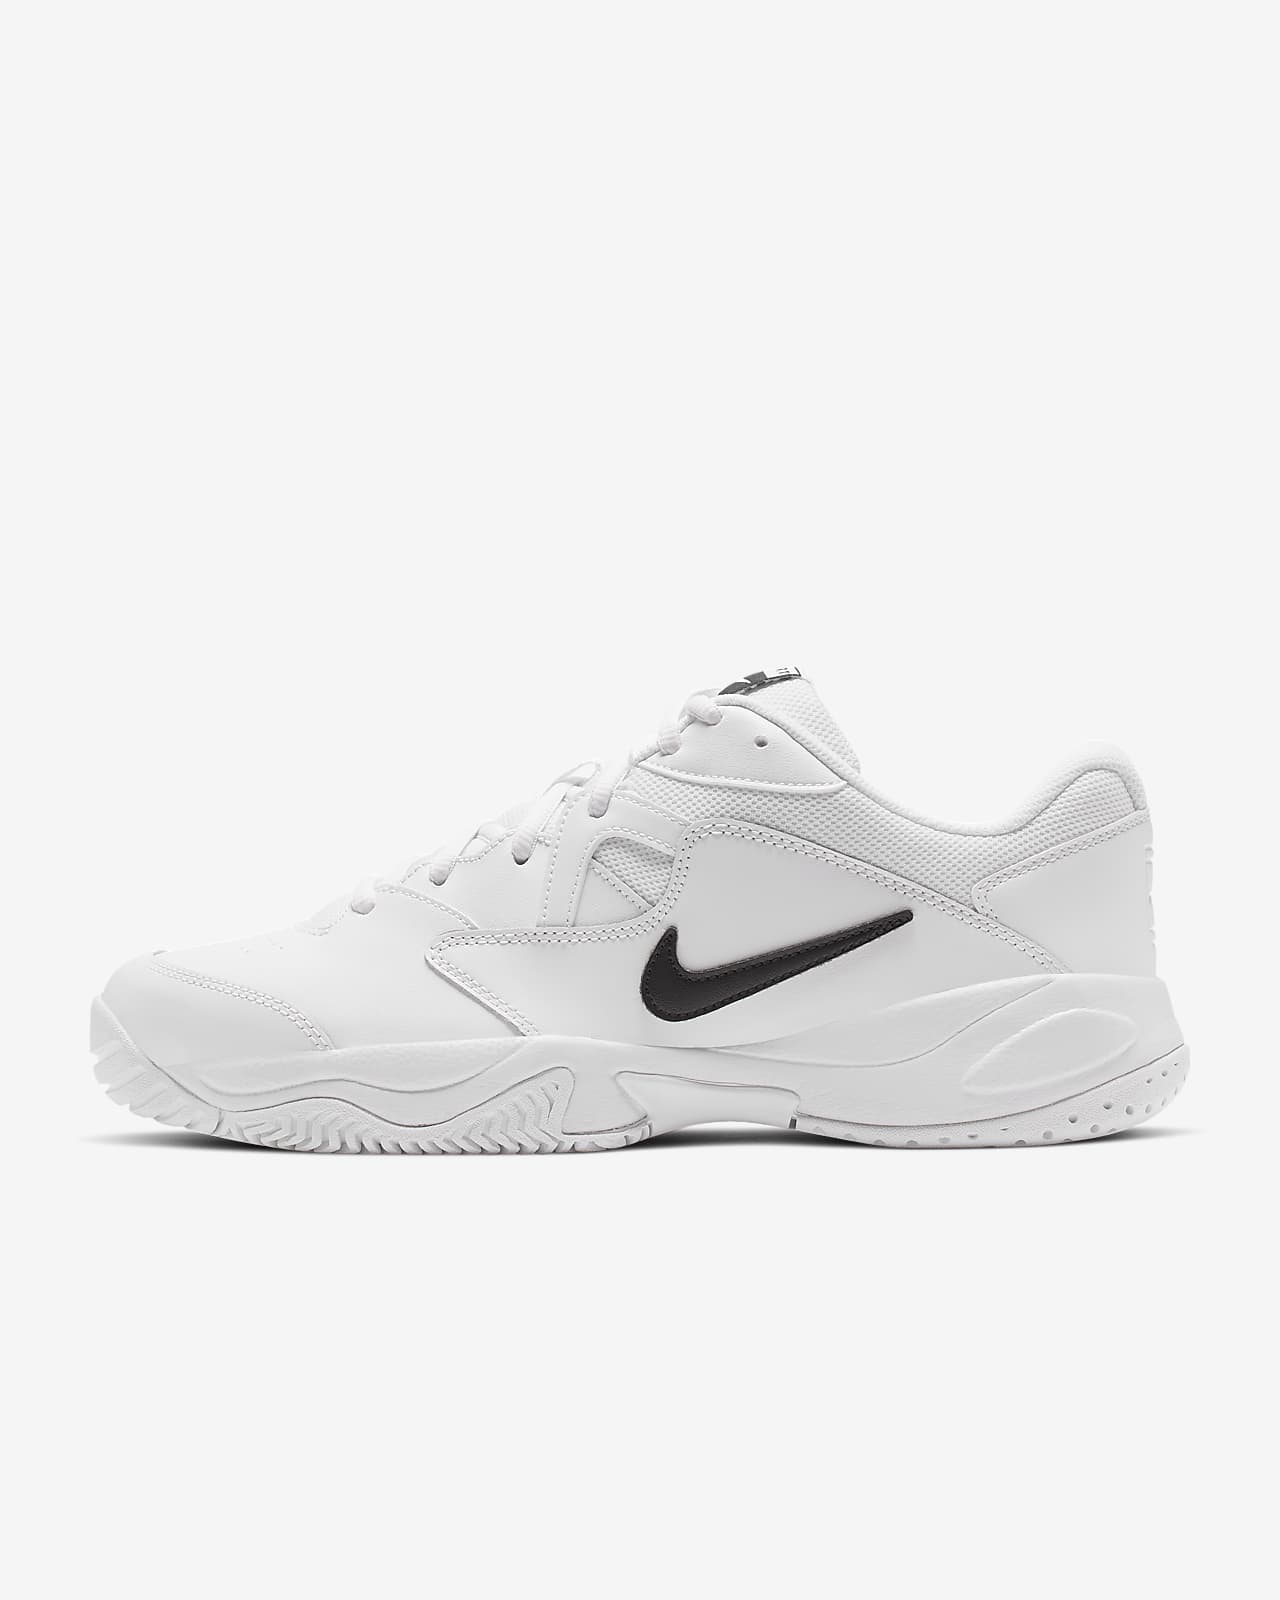 NikeCourt Lite 2 Men's Hard Court Tennis Shoes